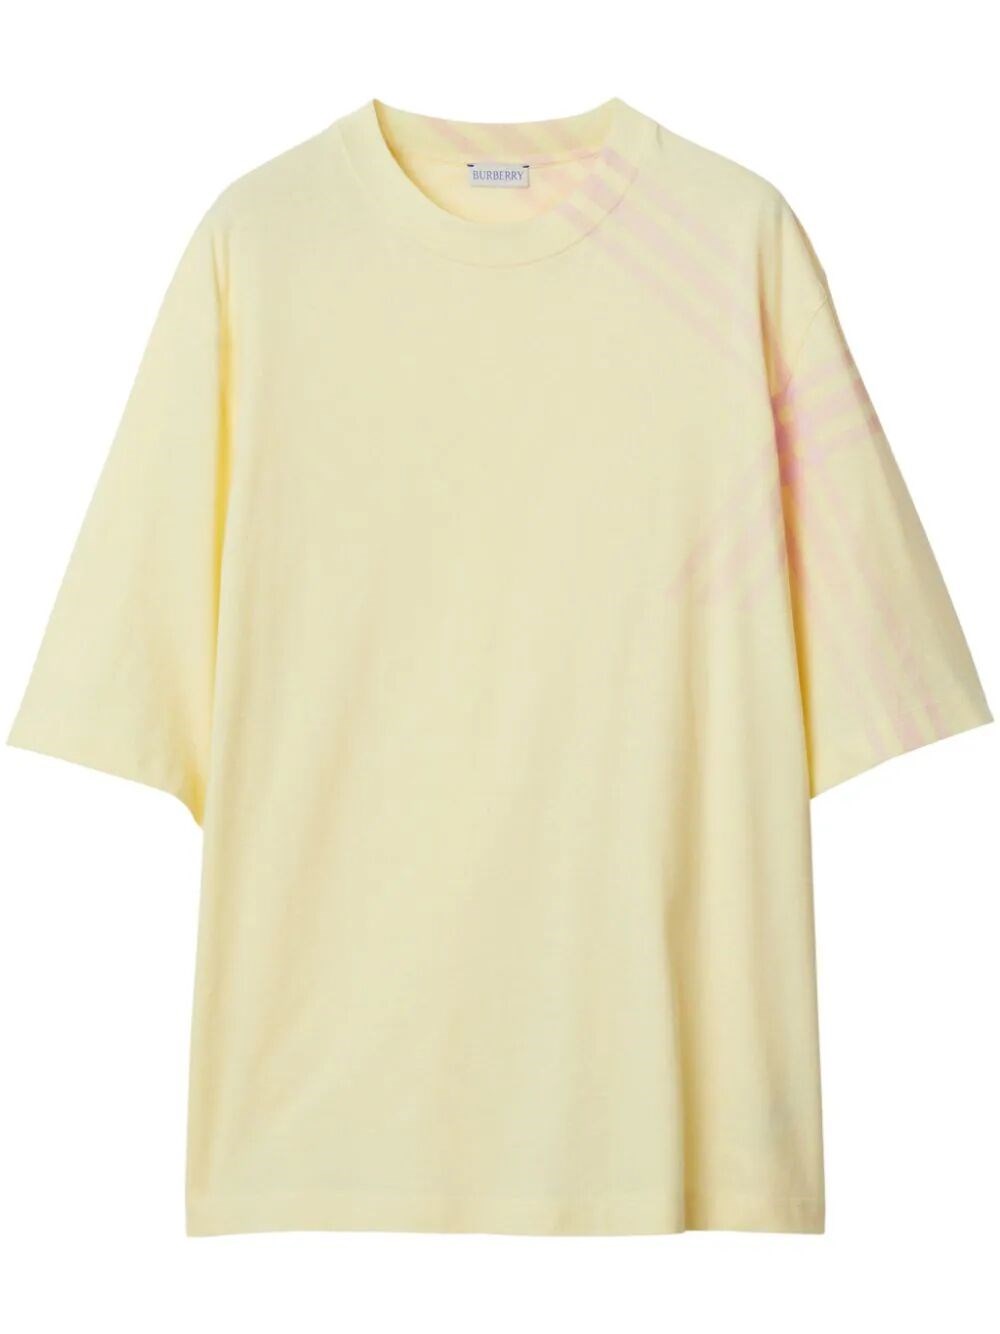 Burberry Check Detail T-shirt In Yellow & Orange